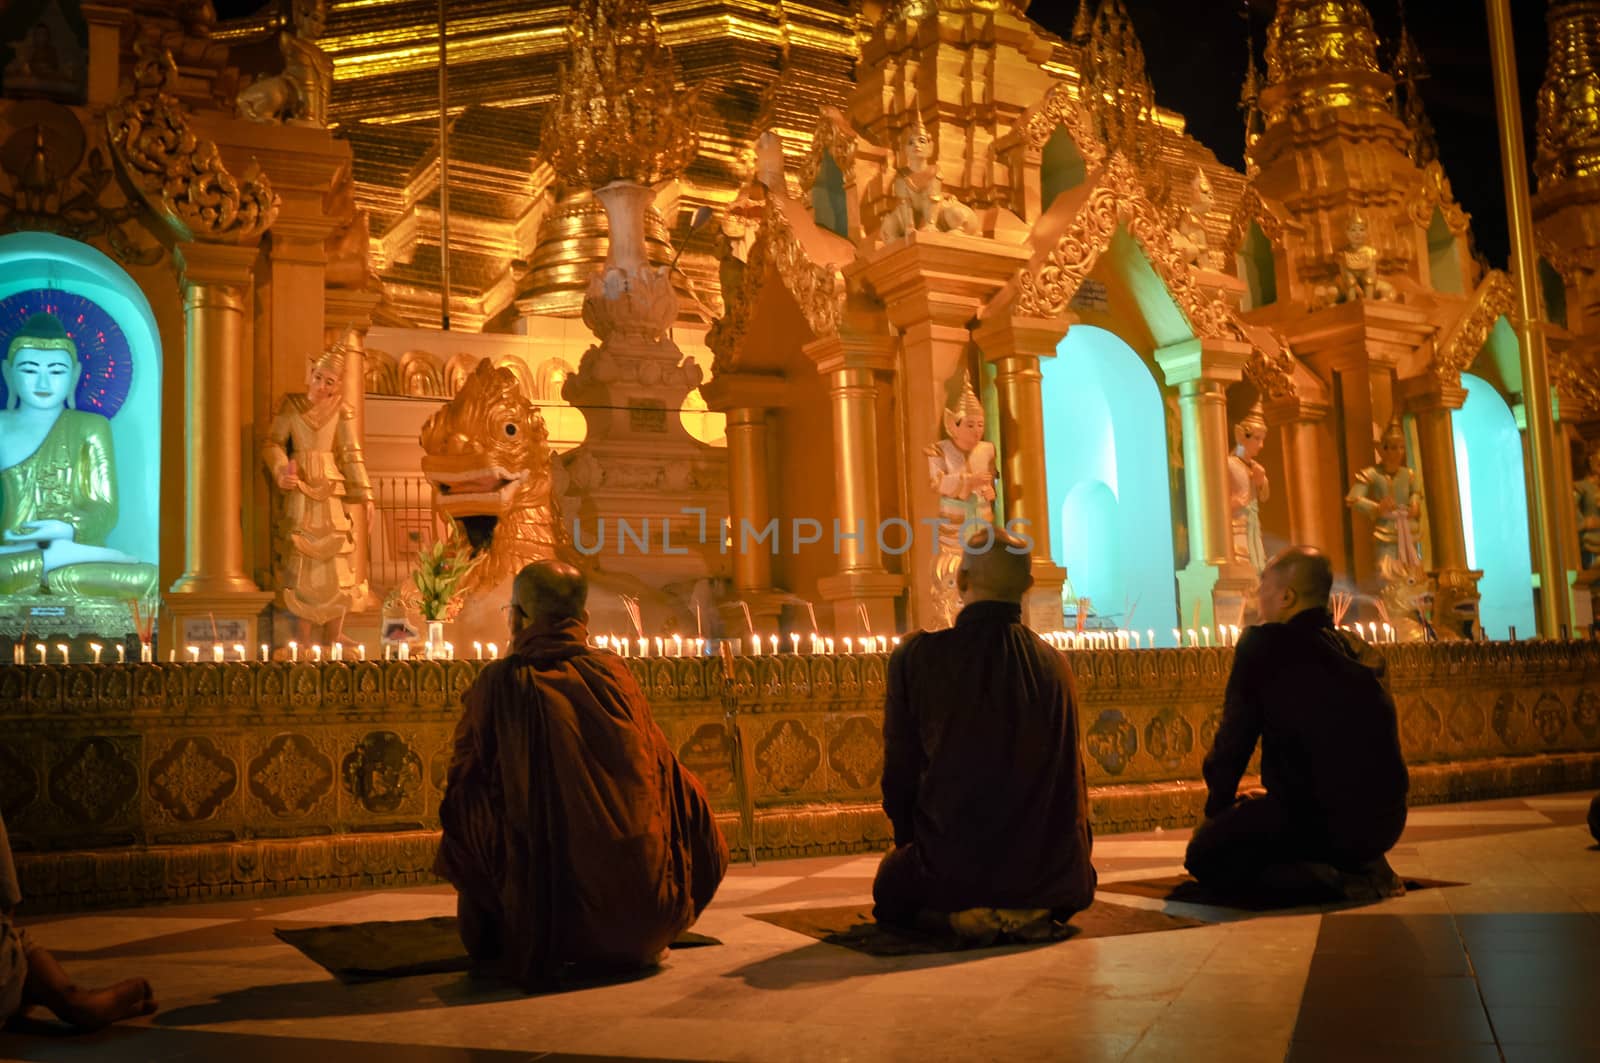 Three Monks Shwedagon Pagoda in Yangon City, Burma with Beautiful Evening Light: the beautiful golden pagoda, the oldest historical pagoda in Burma and the world, in the evening with great evening light.